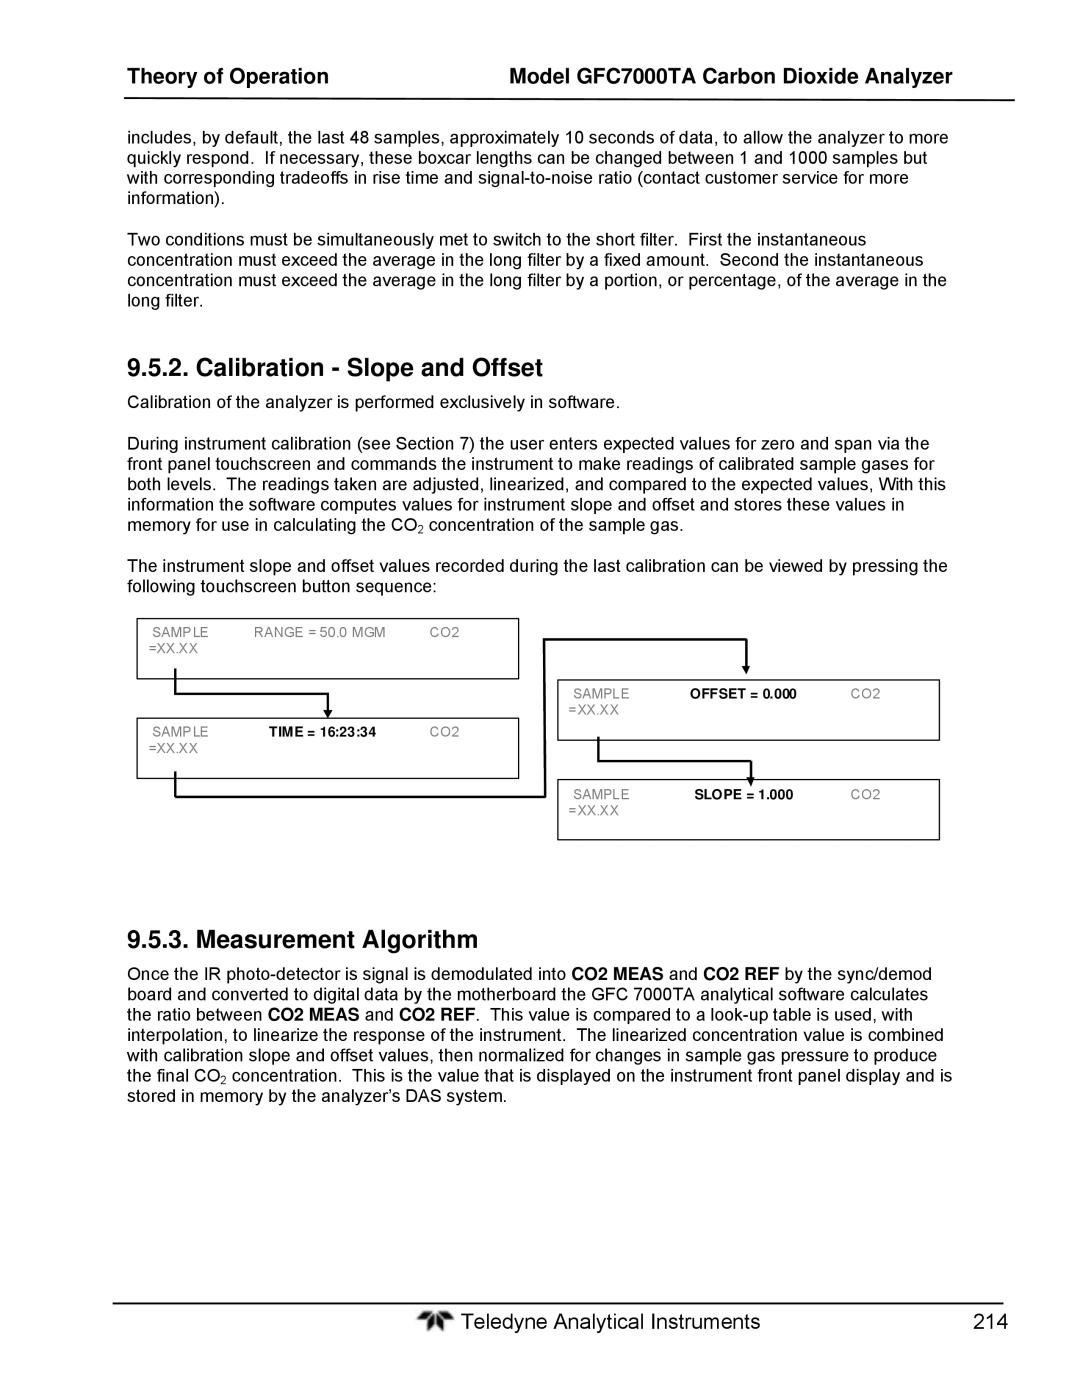 Teledyne gfc 7000ta operation manual Calibration Slope and Offset, Measurement Algorithm 